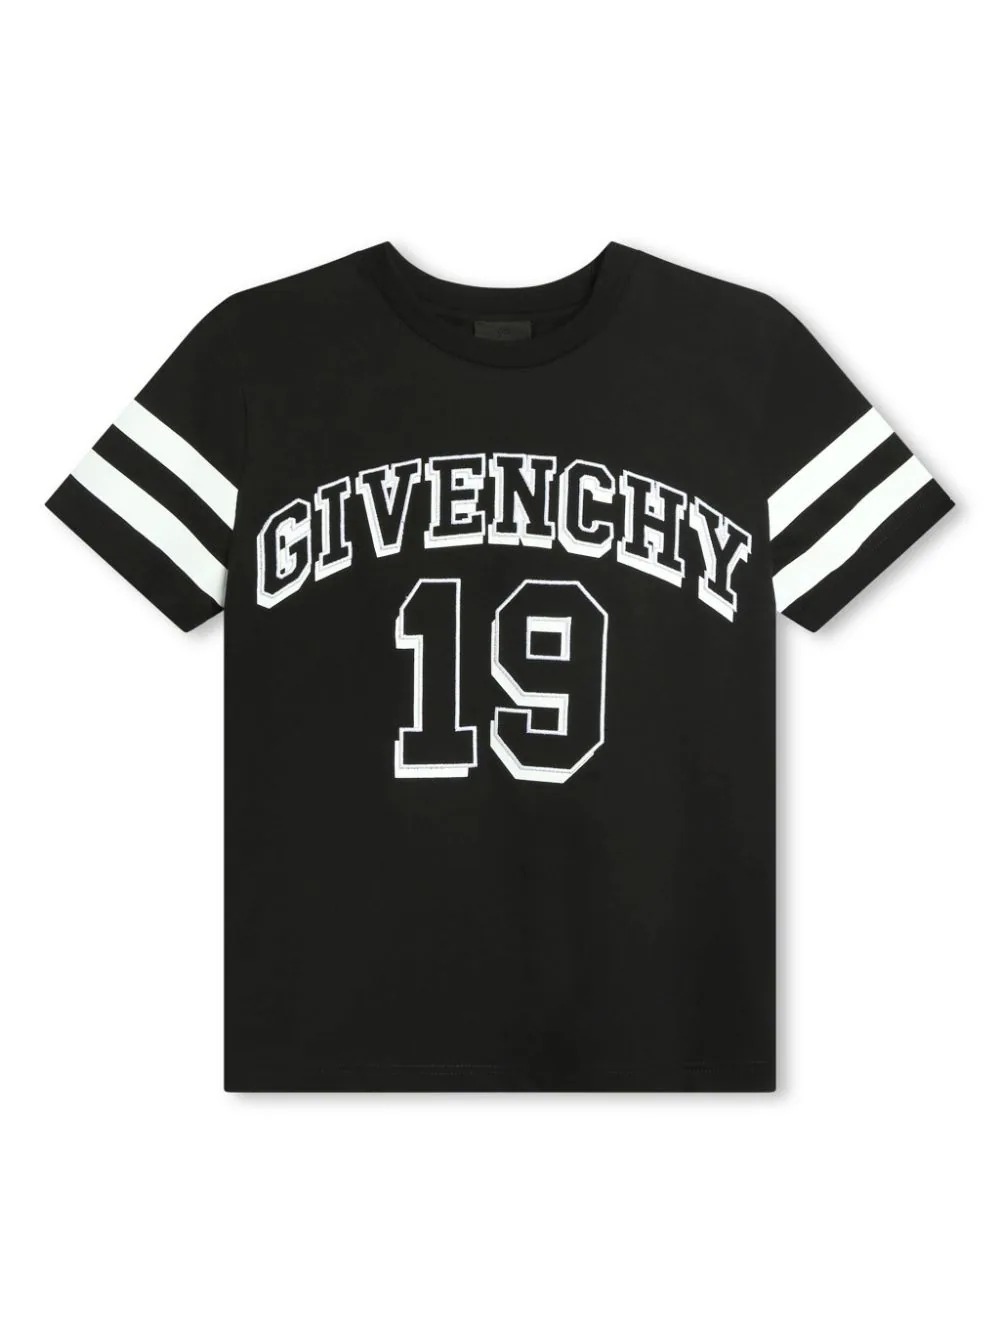 Givenchy - Teen Girls White 4G Cotton T-Shirt